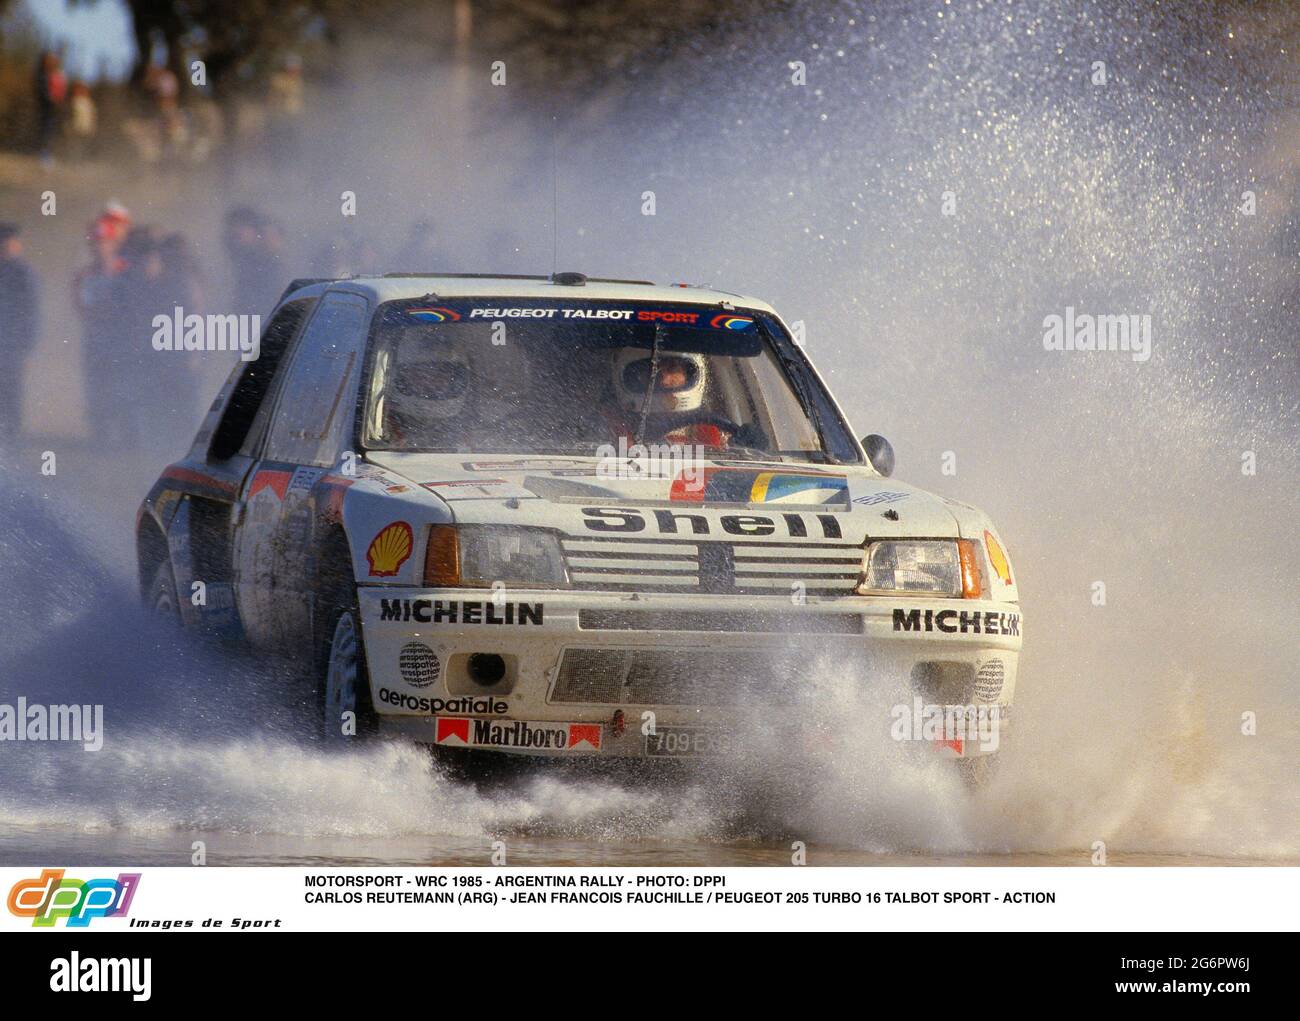 MOTORSPORT - WRC 1985 - ARGENTINA RALLY - PHOTO: DPPI CARLOS REUTEMANN (ARG) - JEAN FRANCOIS FAUCHILLE / PEUGEOT 205 TURBO 16 TALBOT SPORT - ACTION GUE Stock Photo